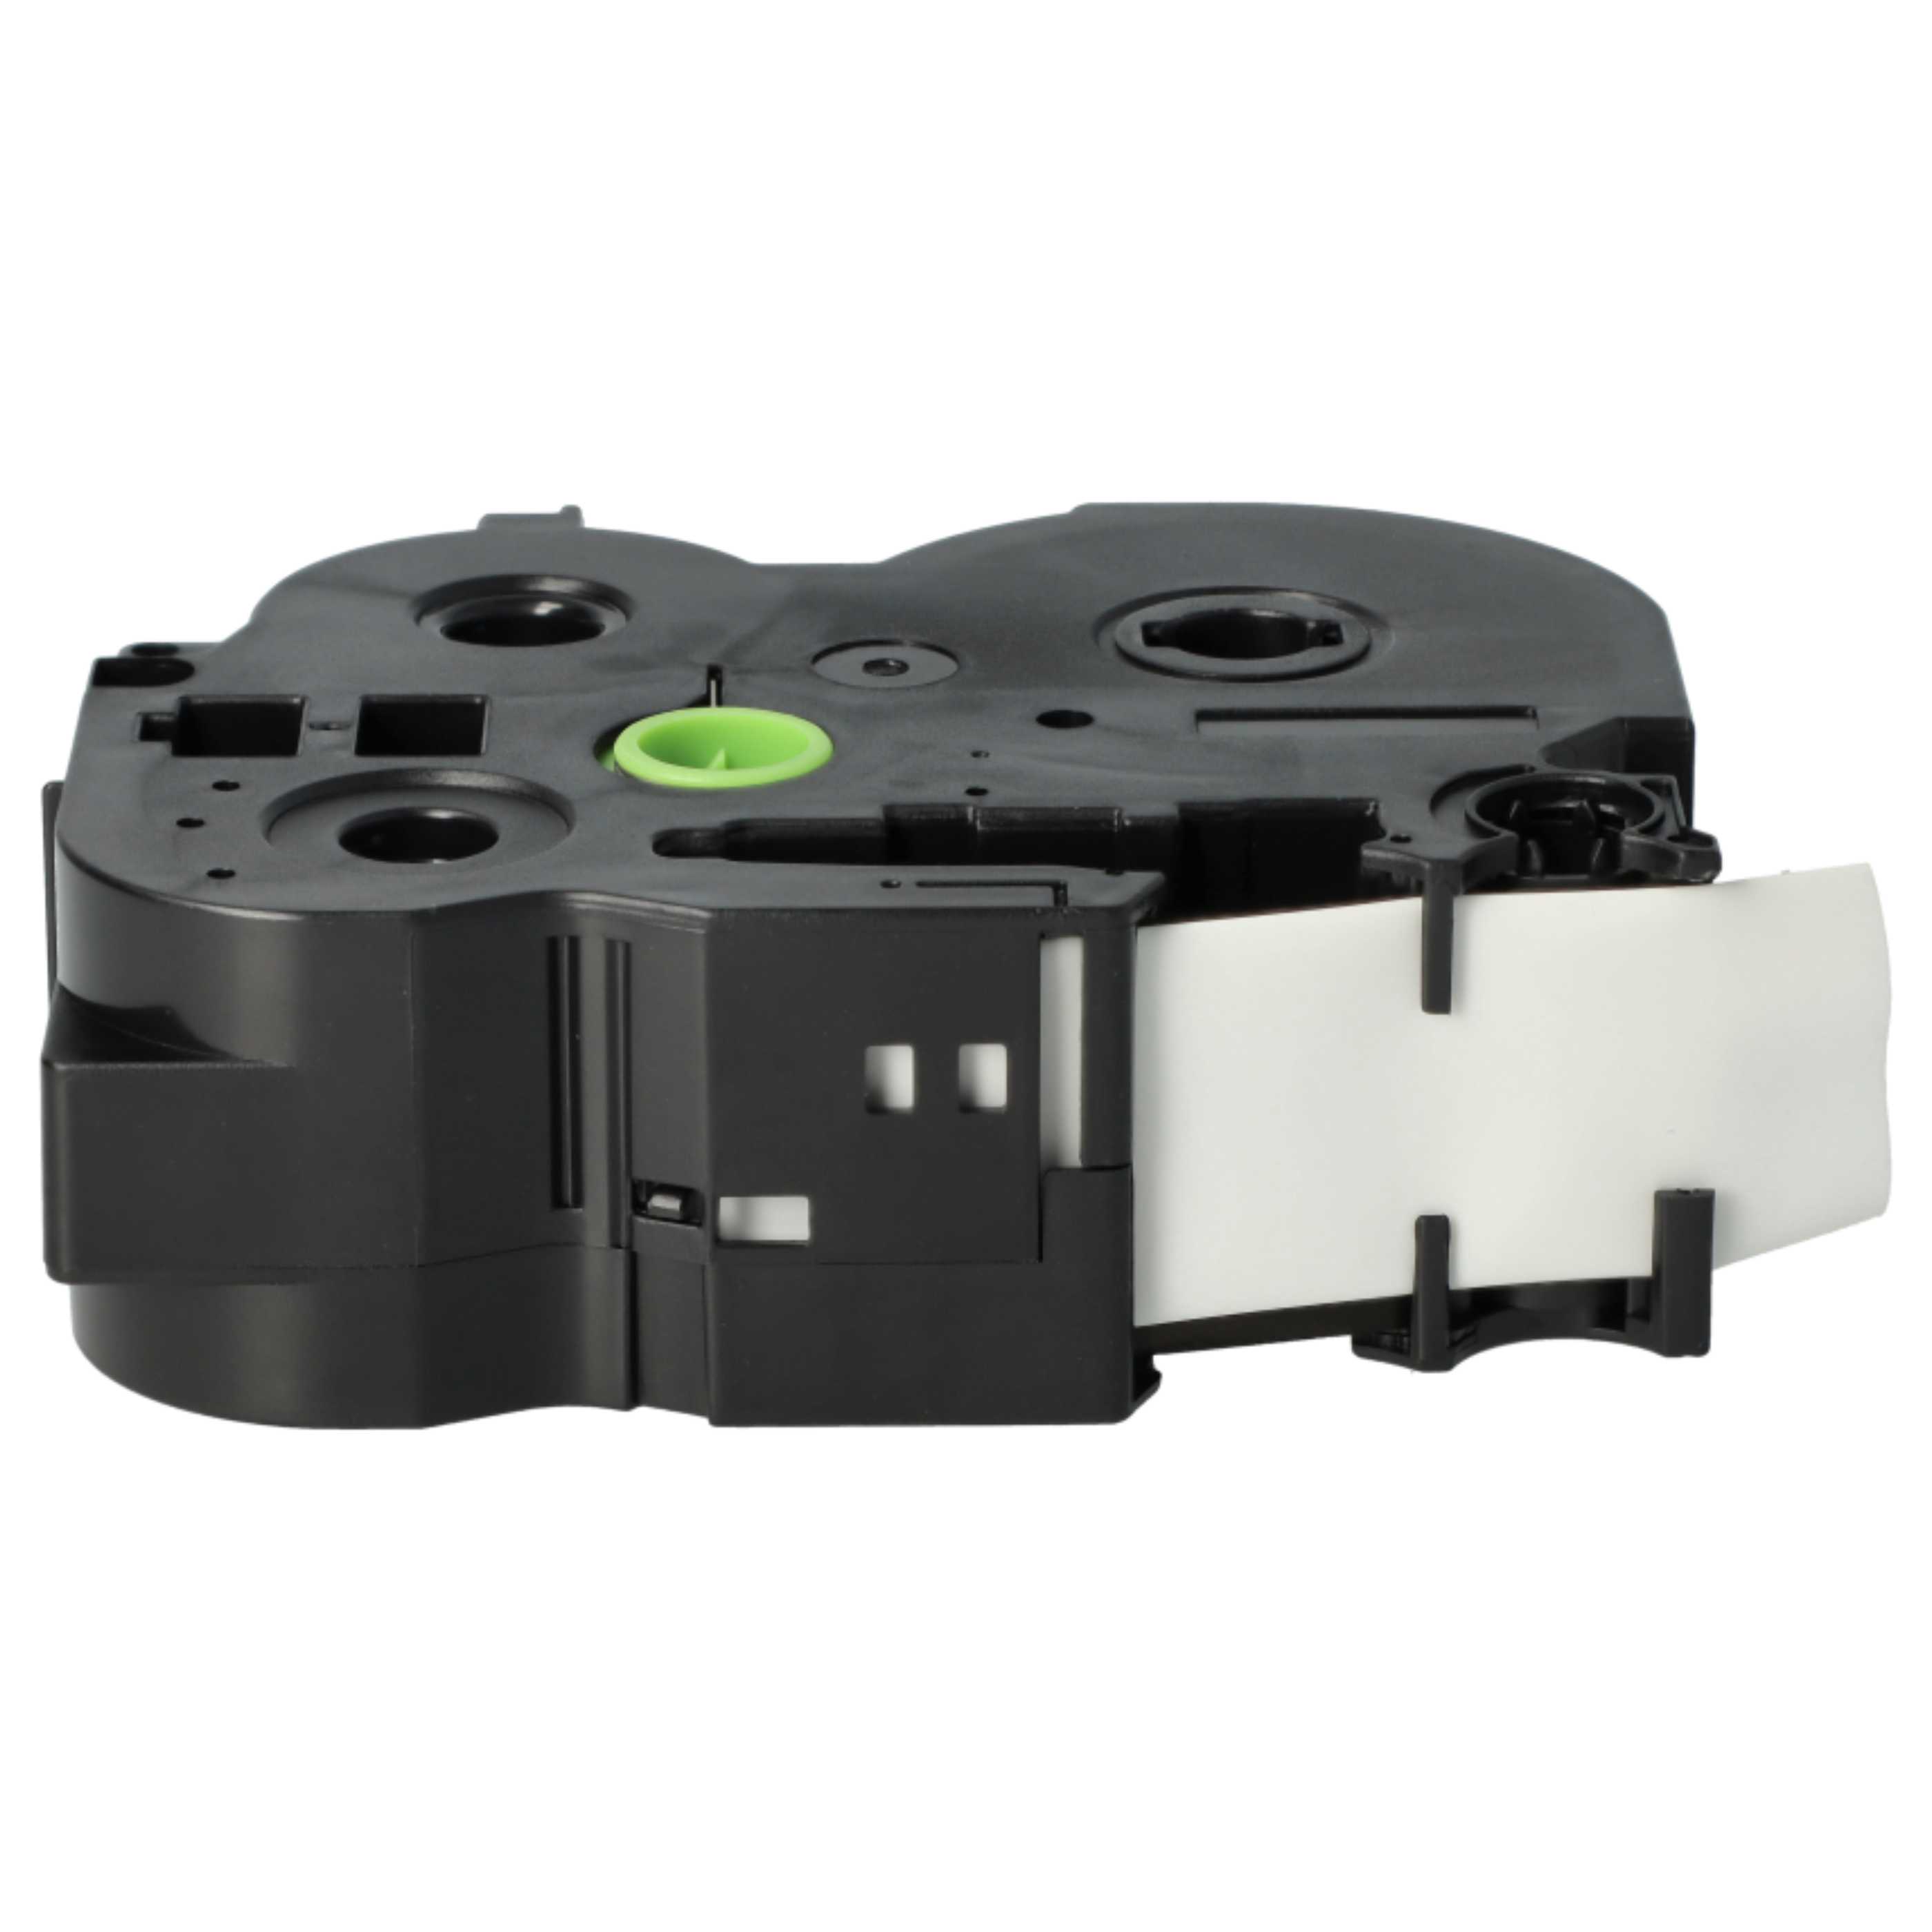 Cassetta tubi termorestringenti sostituisce Brother AHS-251 per etichettatrice Brother 23,6mm nero su bianco